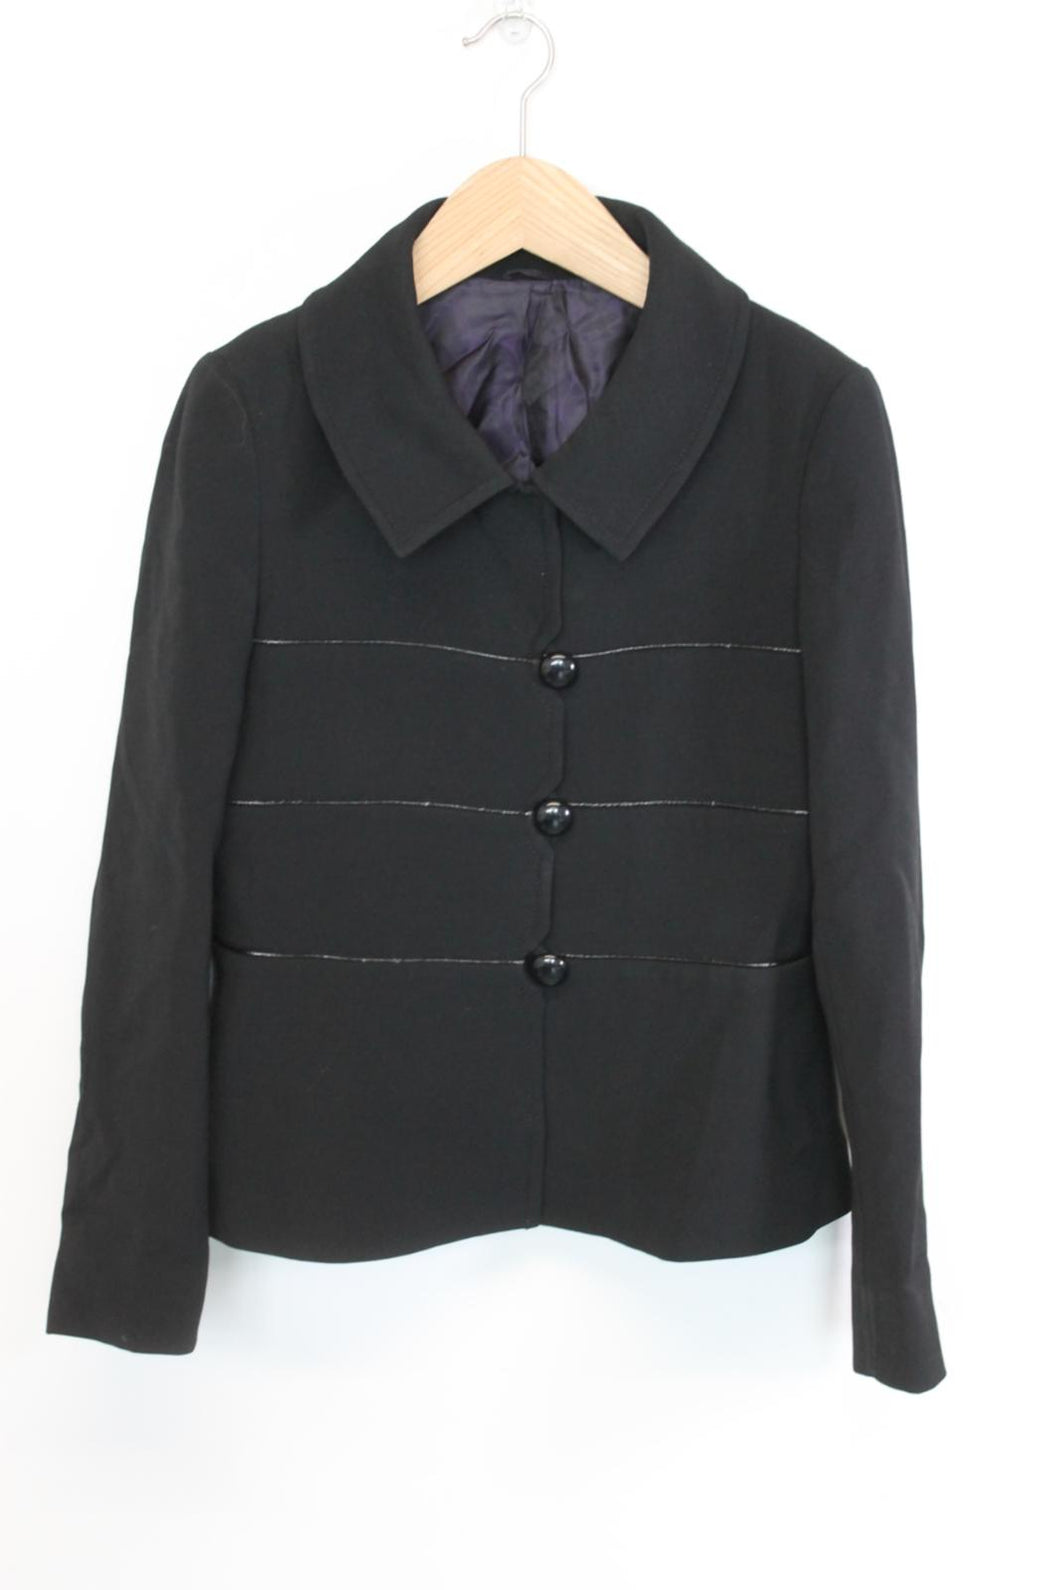 HOBBS Ladies Black Wool Long Sleeve Collared 3-Button Jacket EU40 UK12